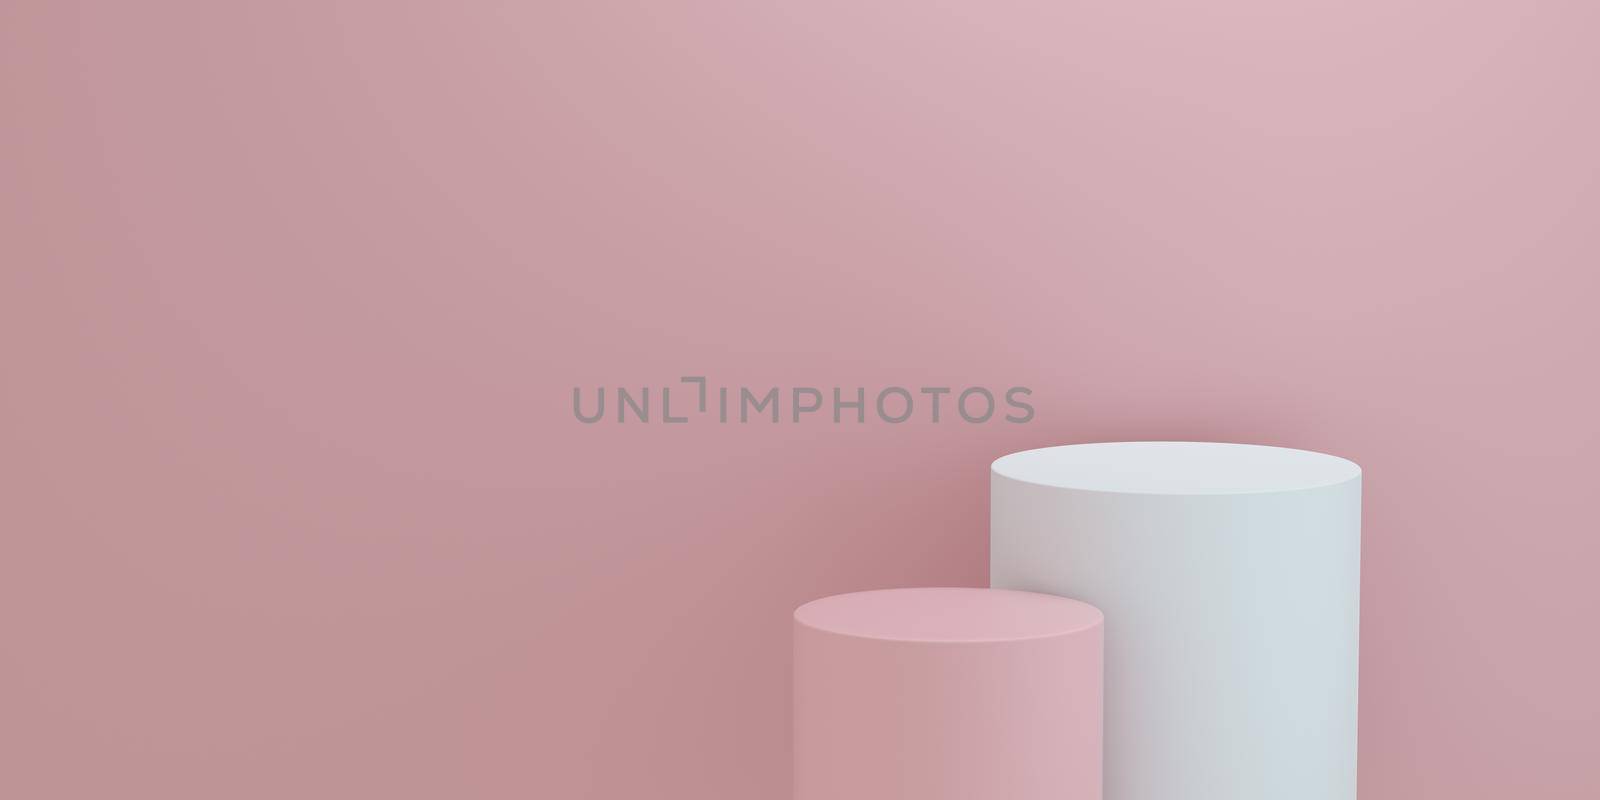 cylindrical podium for product display on pink background. Empty podium platform. by ImagesRouges